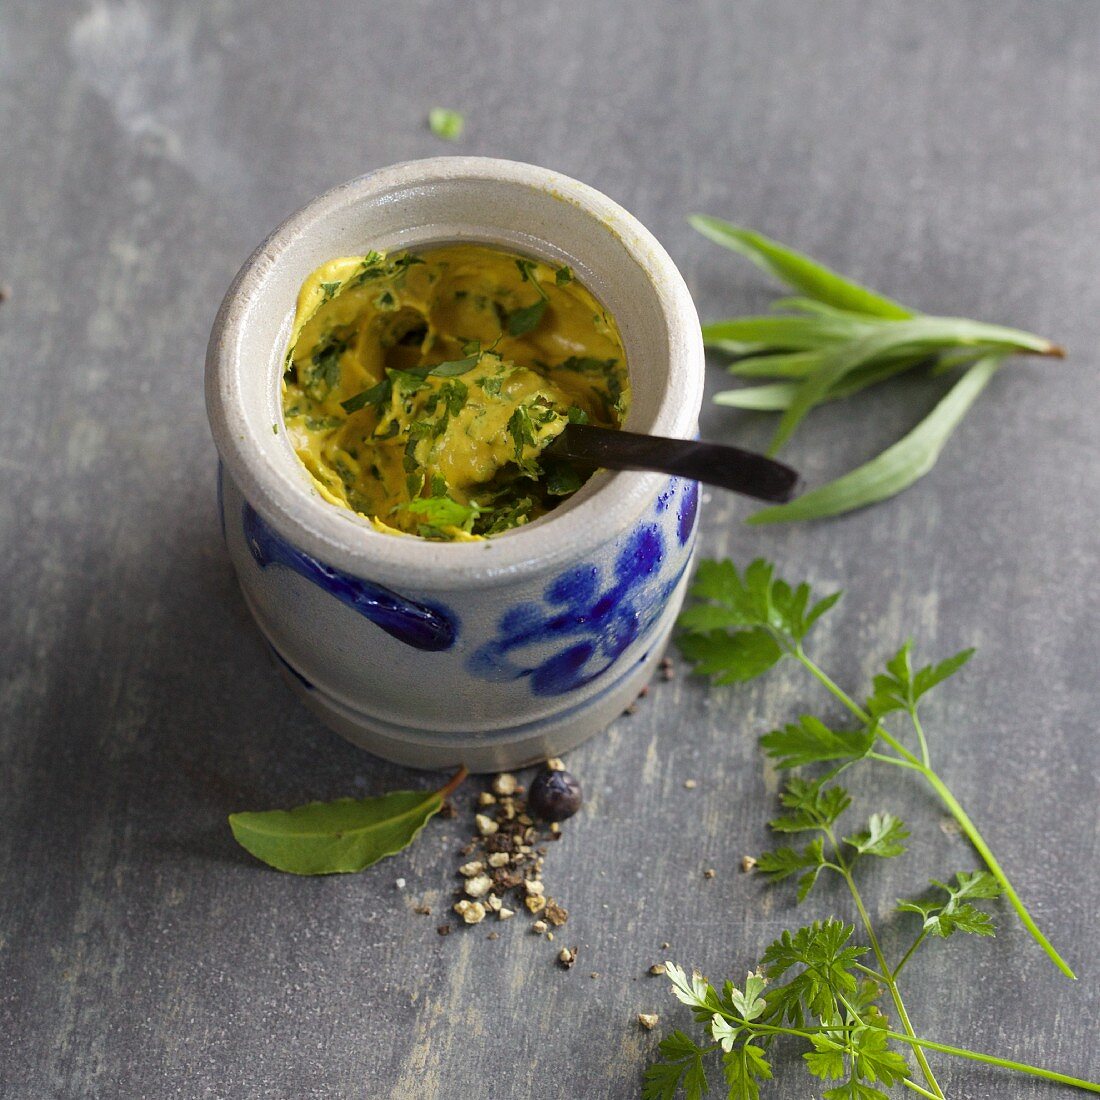 Homemade herb mustard with tarragon